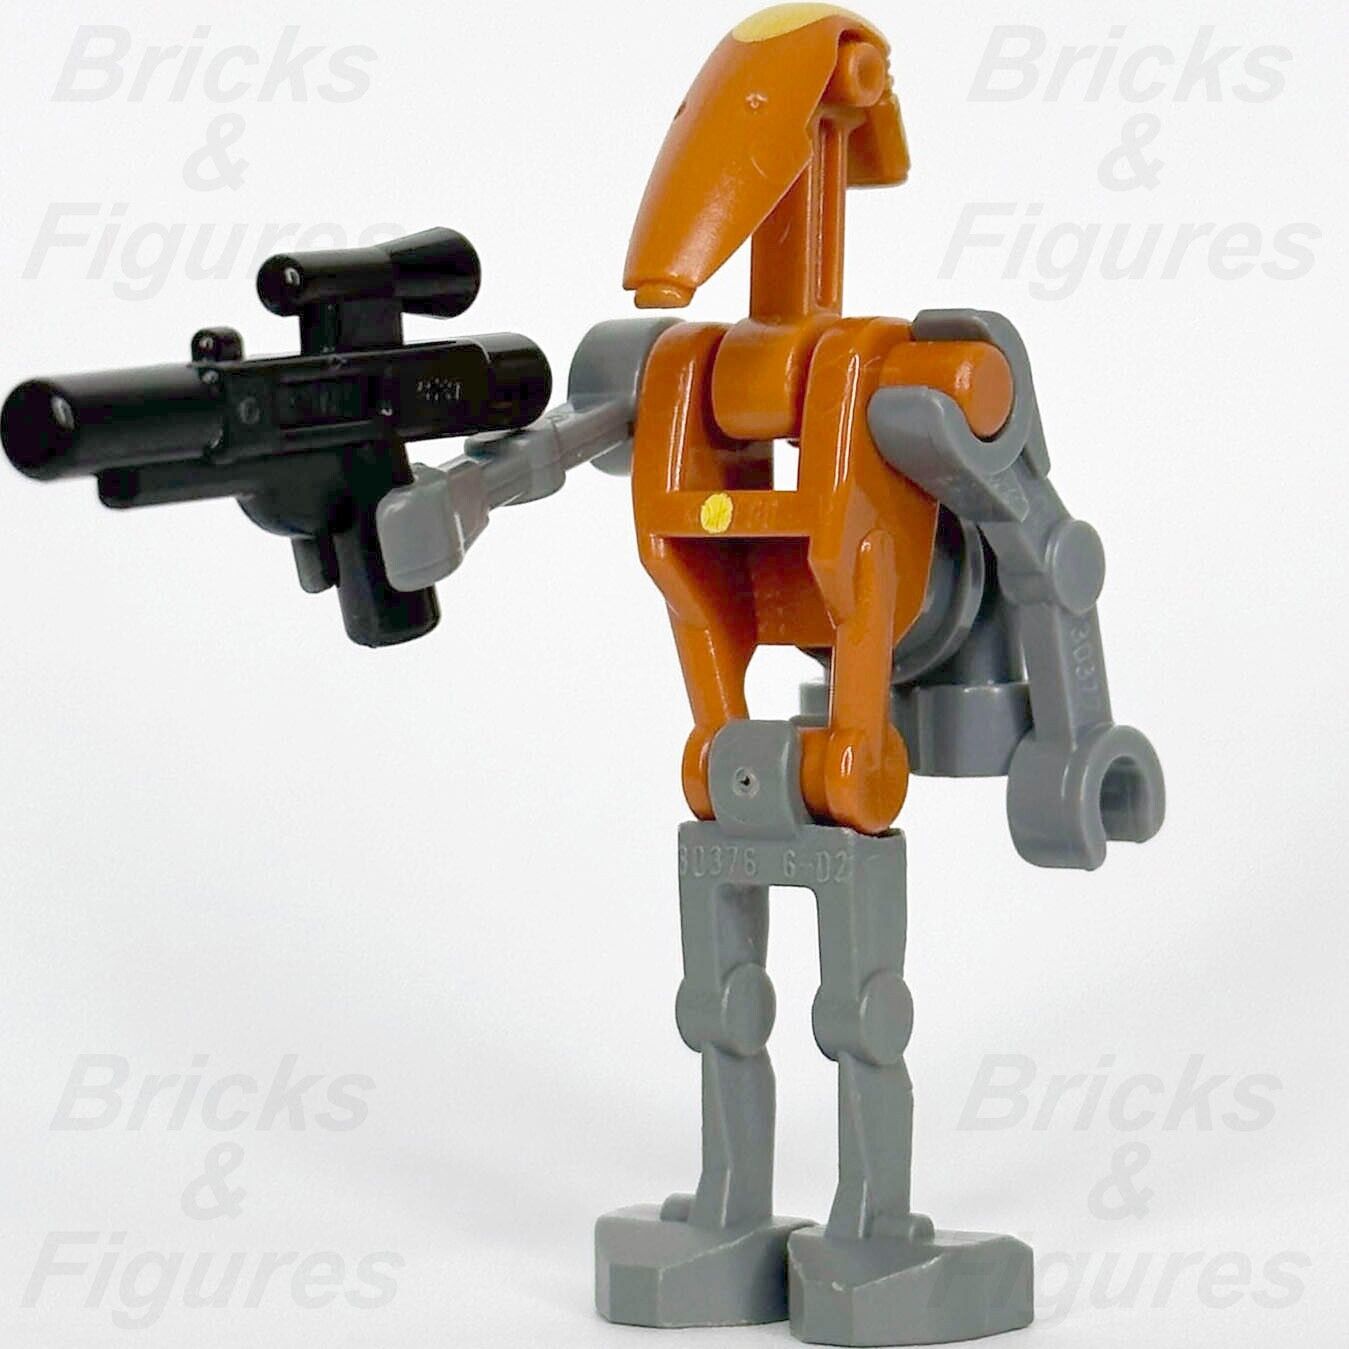 LEGO Star Wars Rocket Battle Droid Commander Minifigure Clone Wars 8086 sw0227 - Bricks & Figures